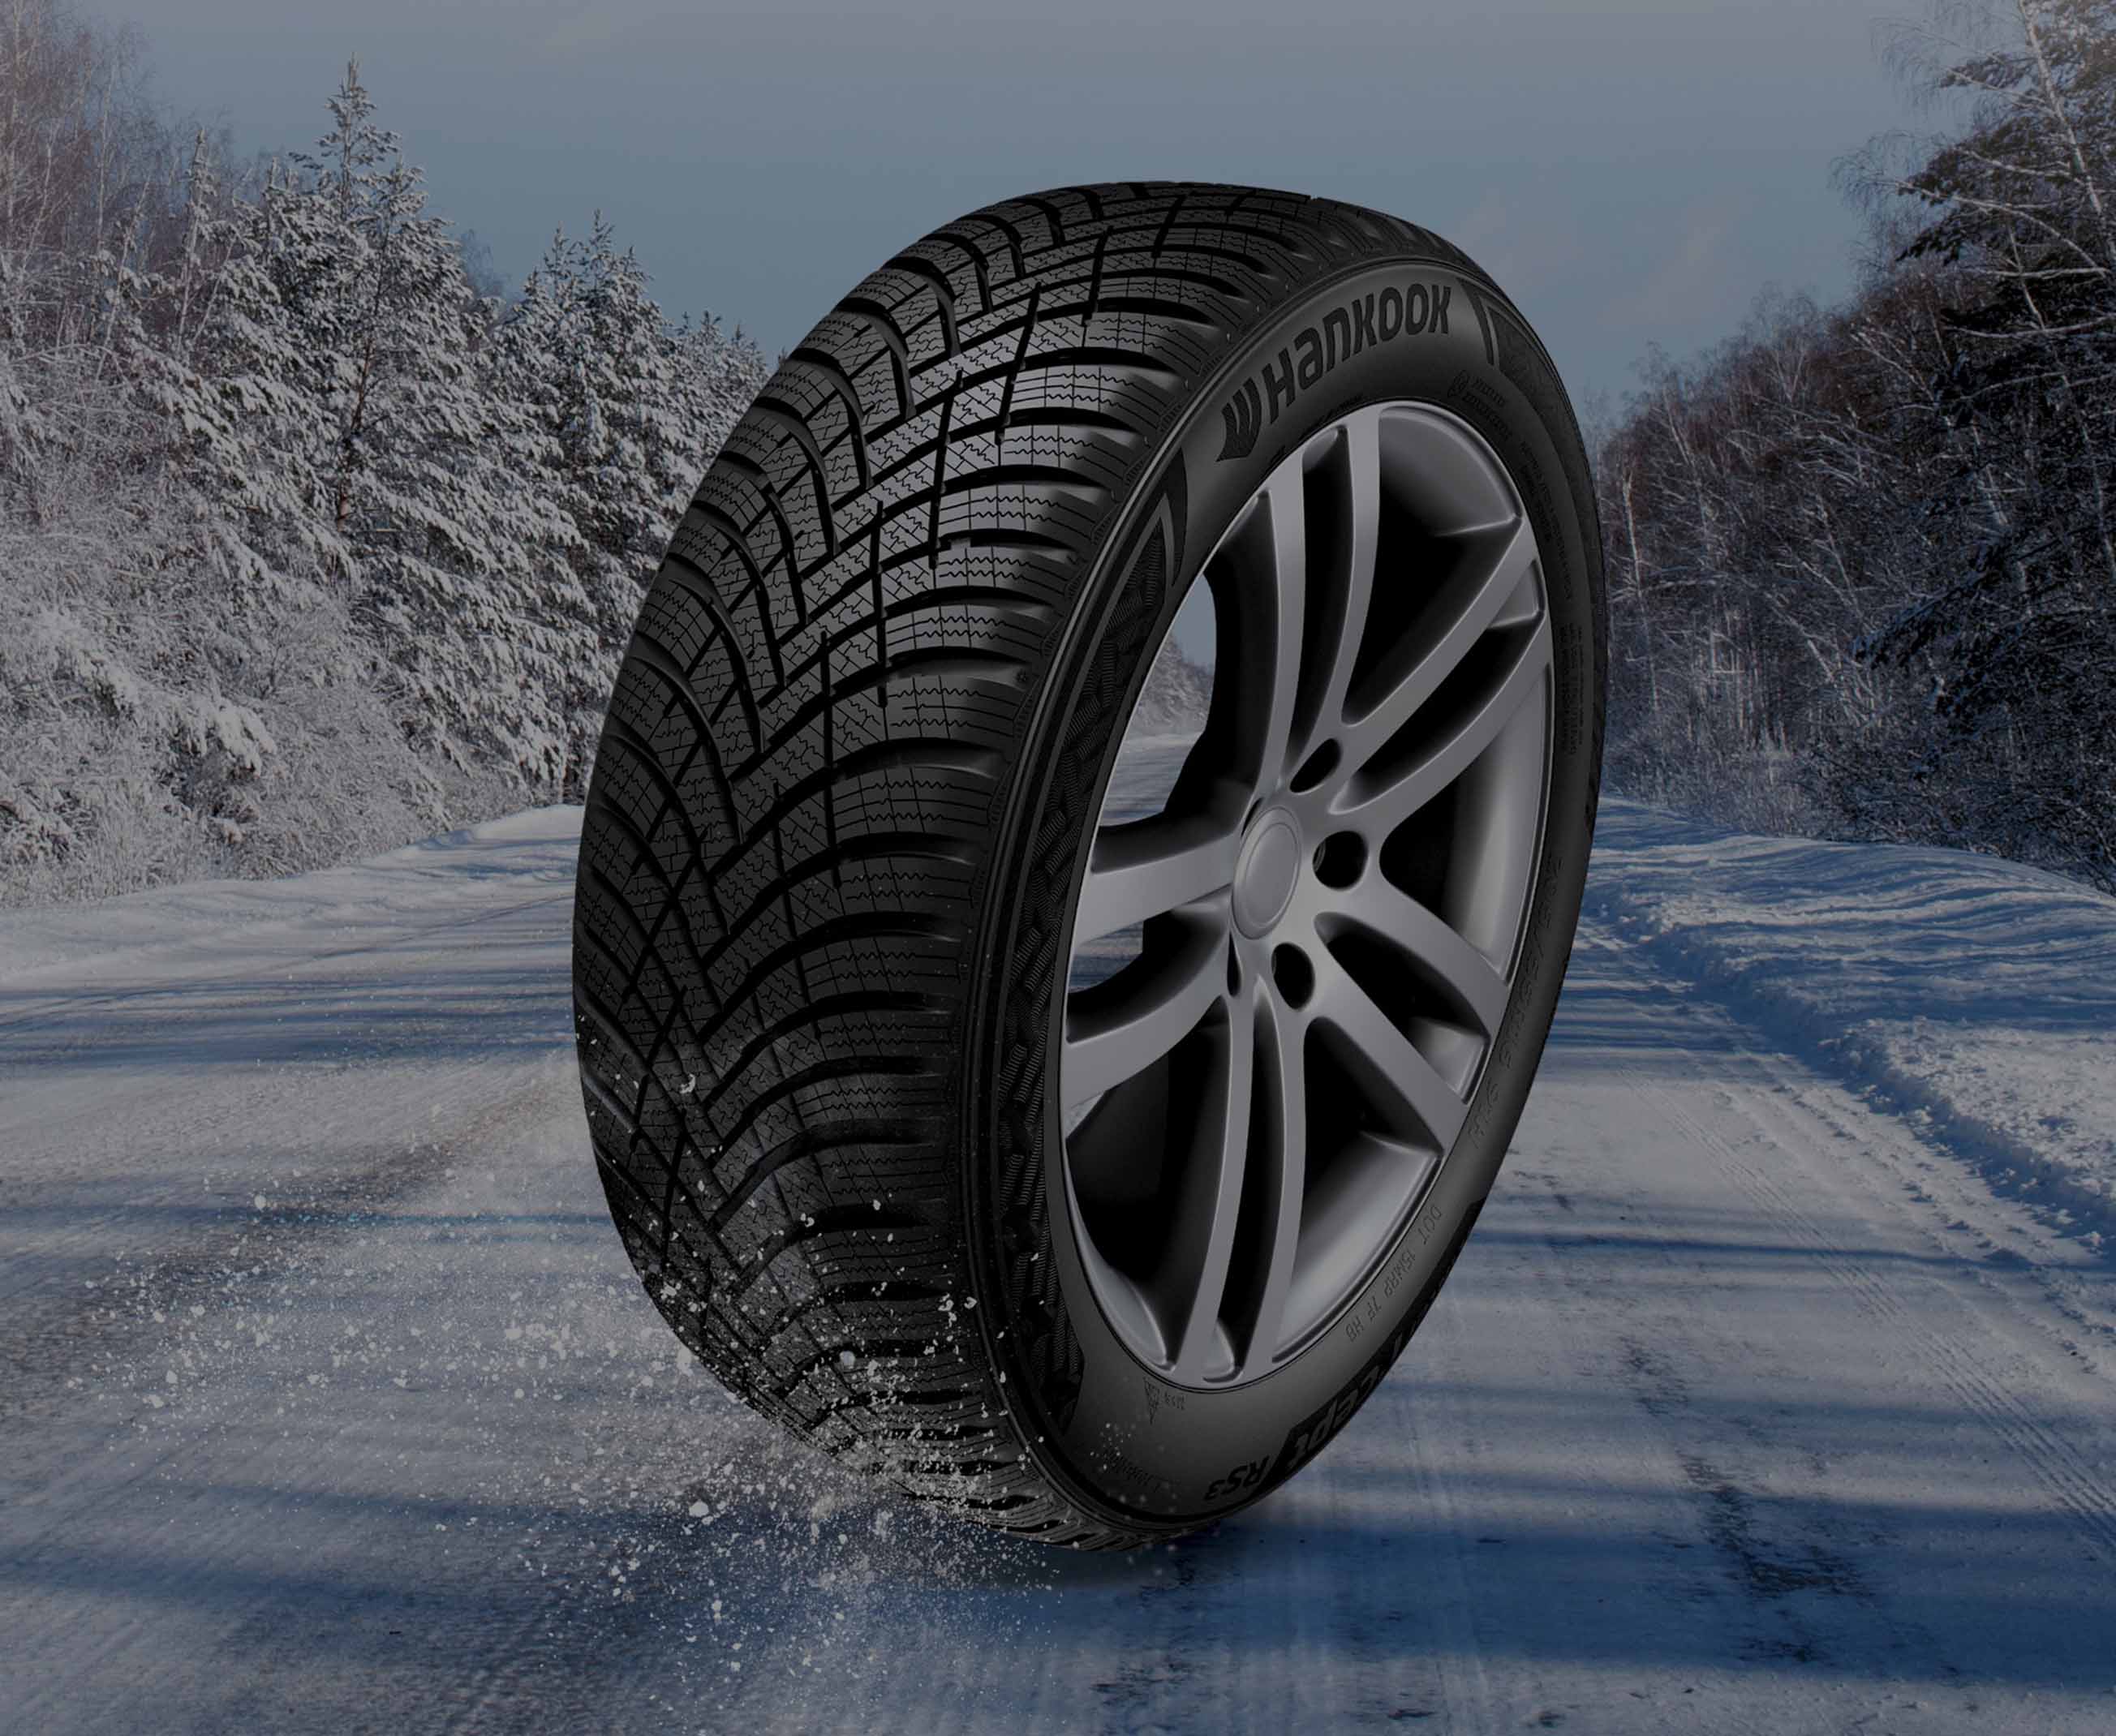 UK Hankook RS3 cept cept i i | Winter W462 - Tire Winter